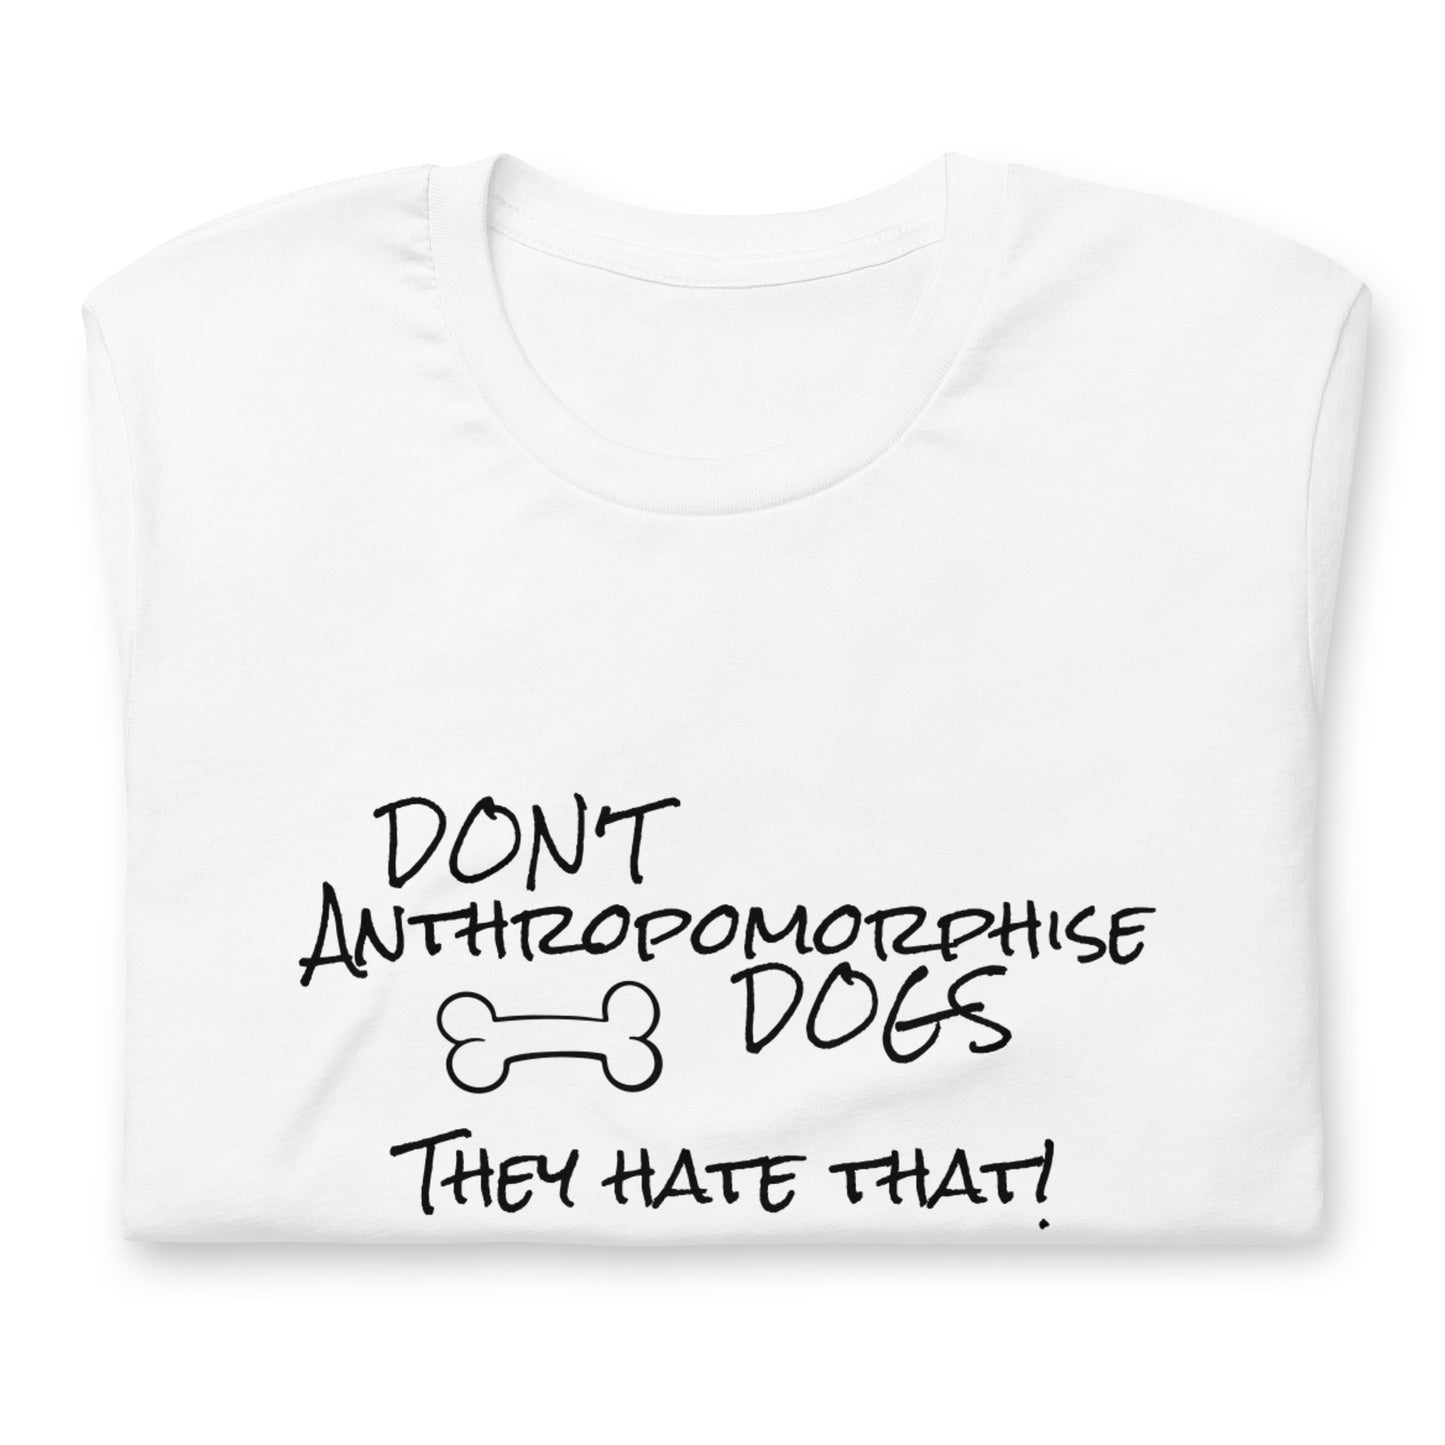 Don't anthropomorphise dogs